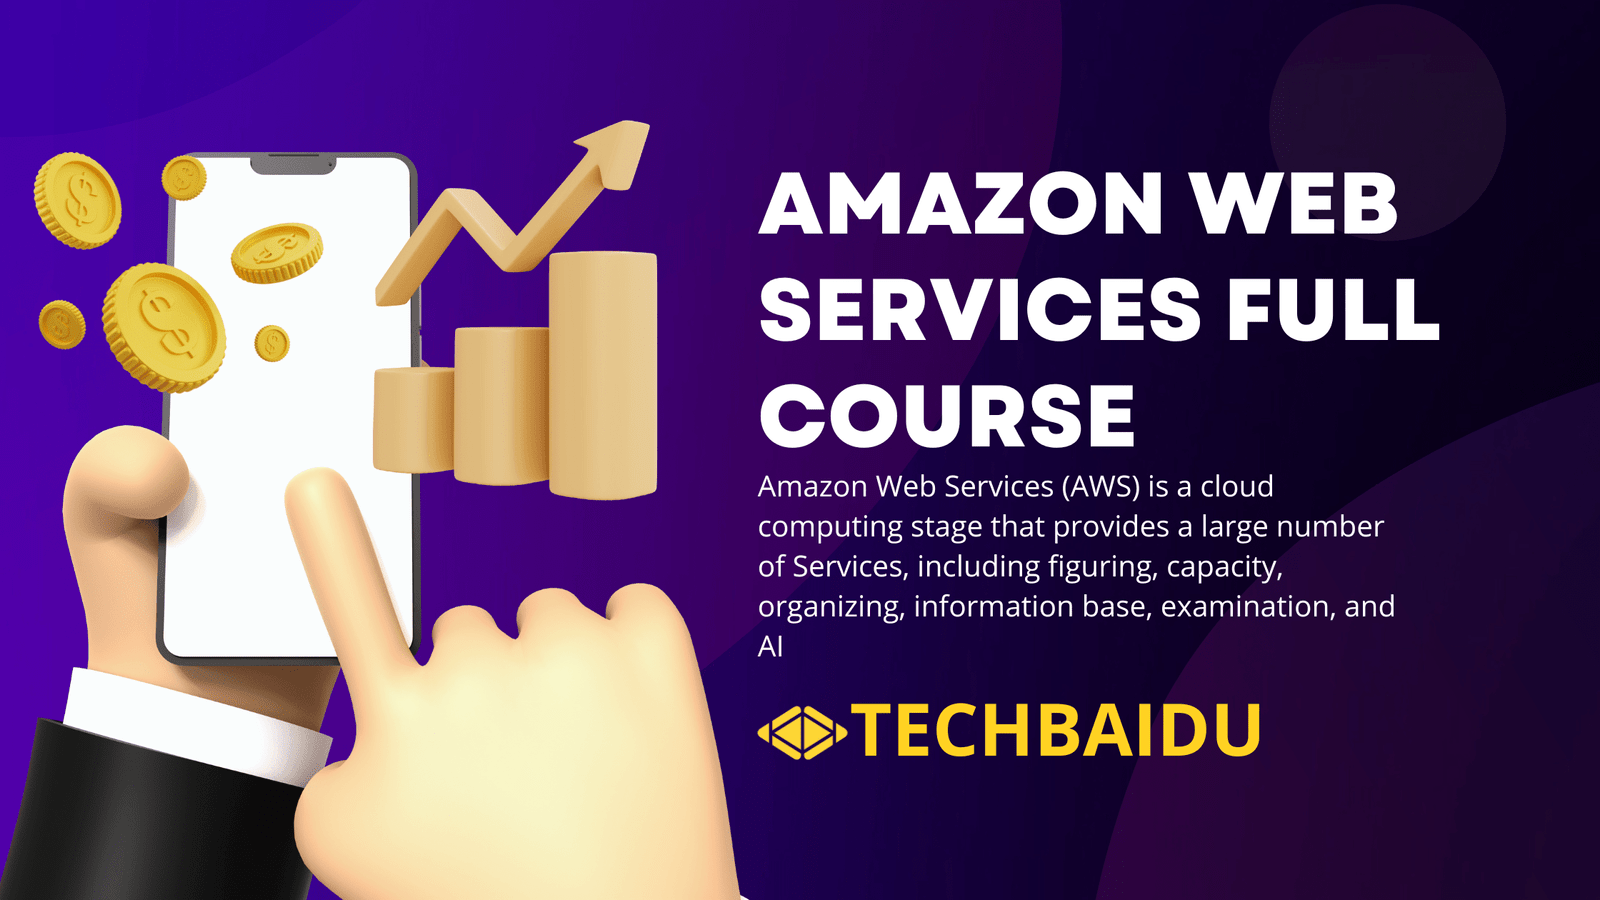 Amazon Web Services Full Course